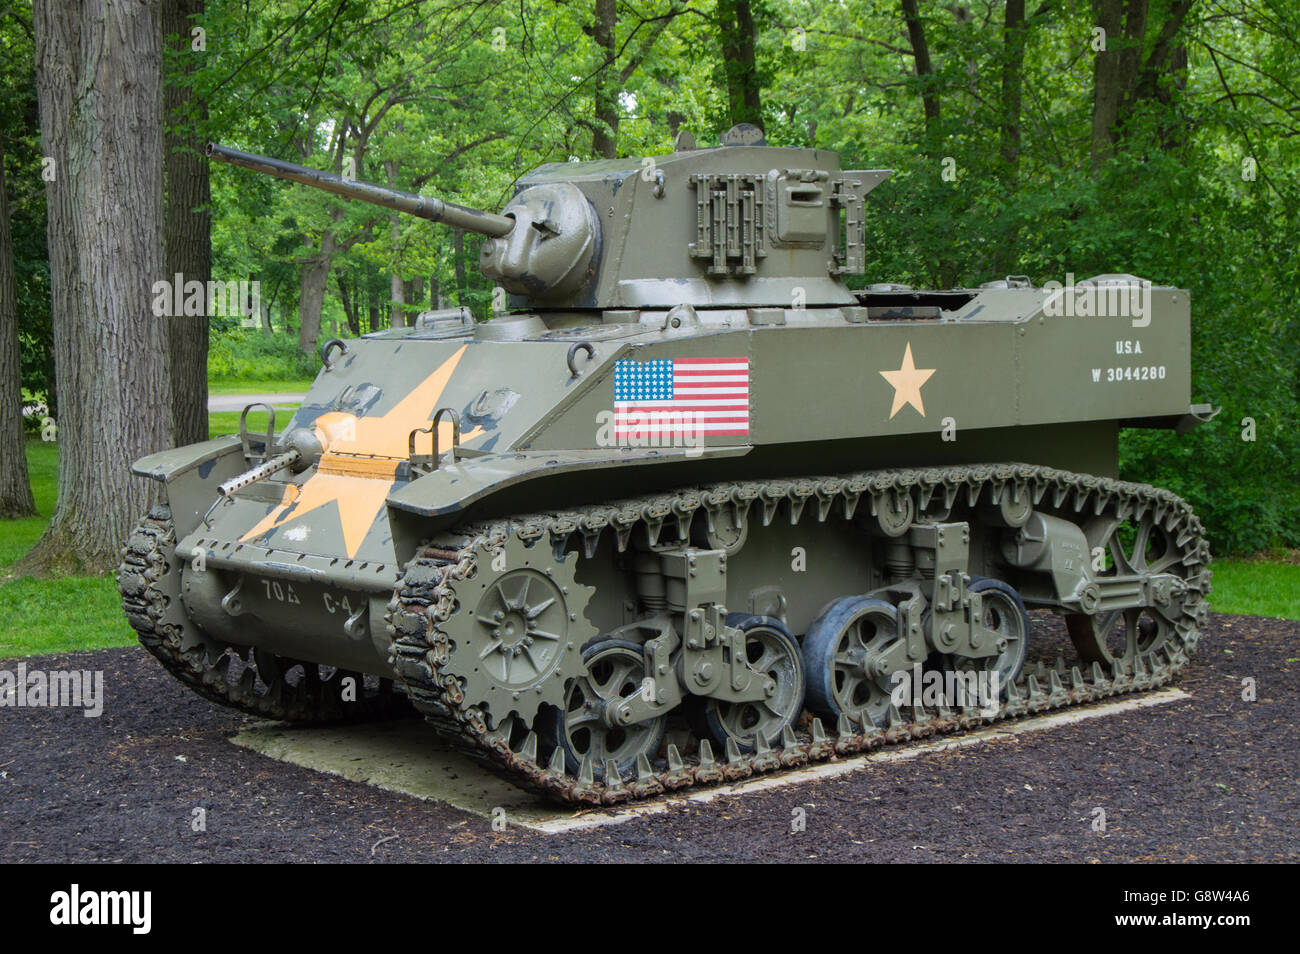 M3 stuart tank stock photography images - Alamy